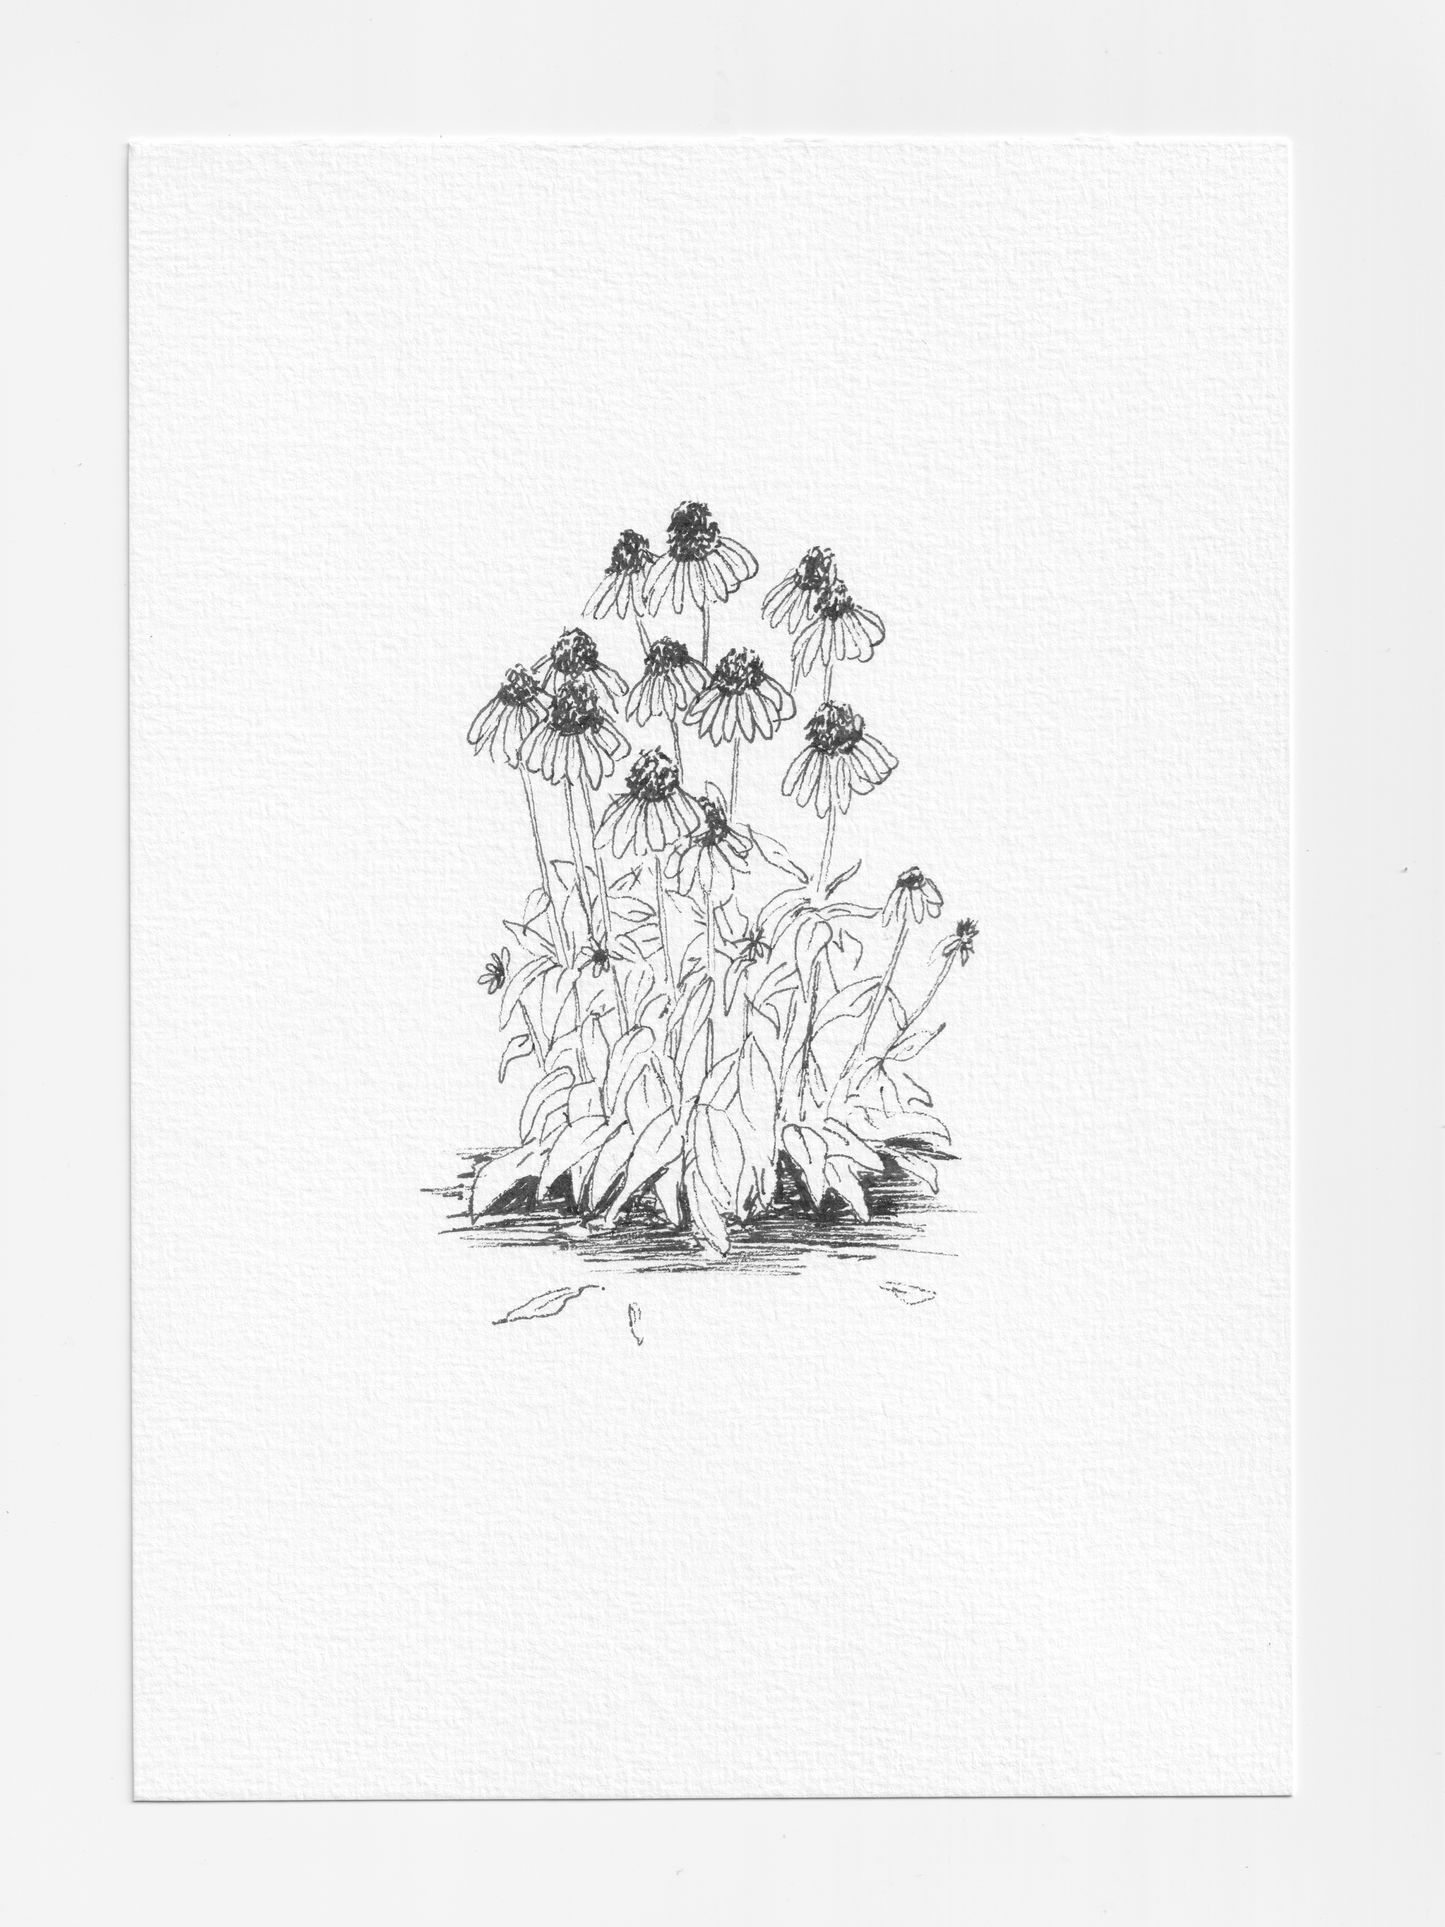 Daily Illustration - Day 17 - Cornflower Daisy